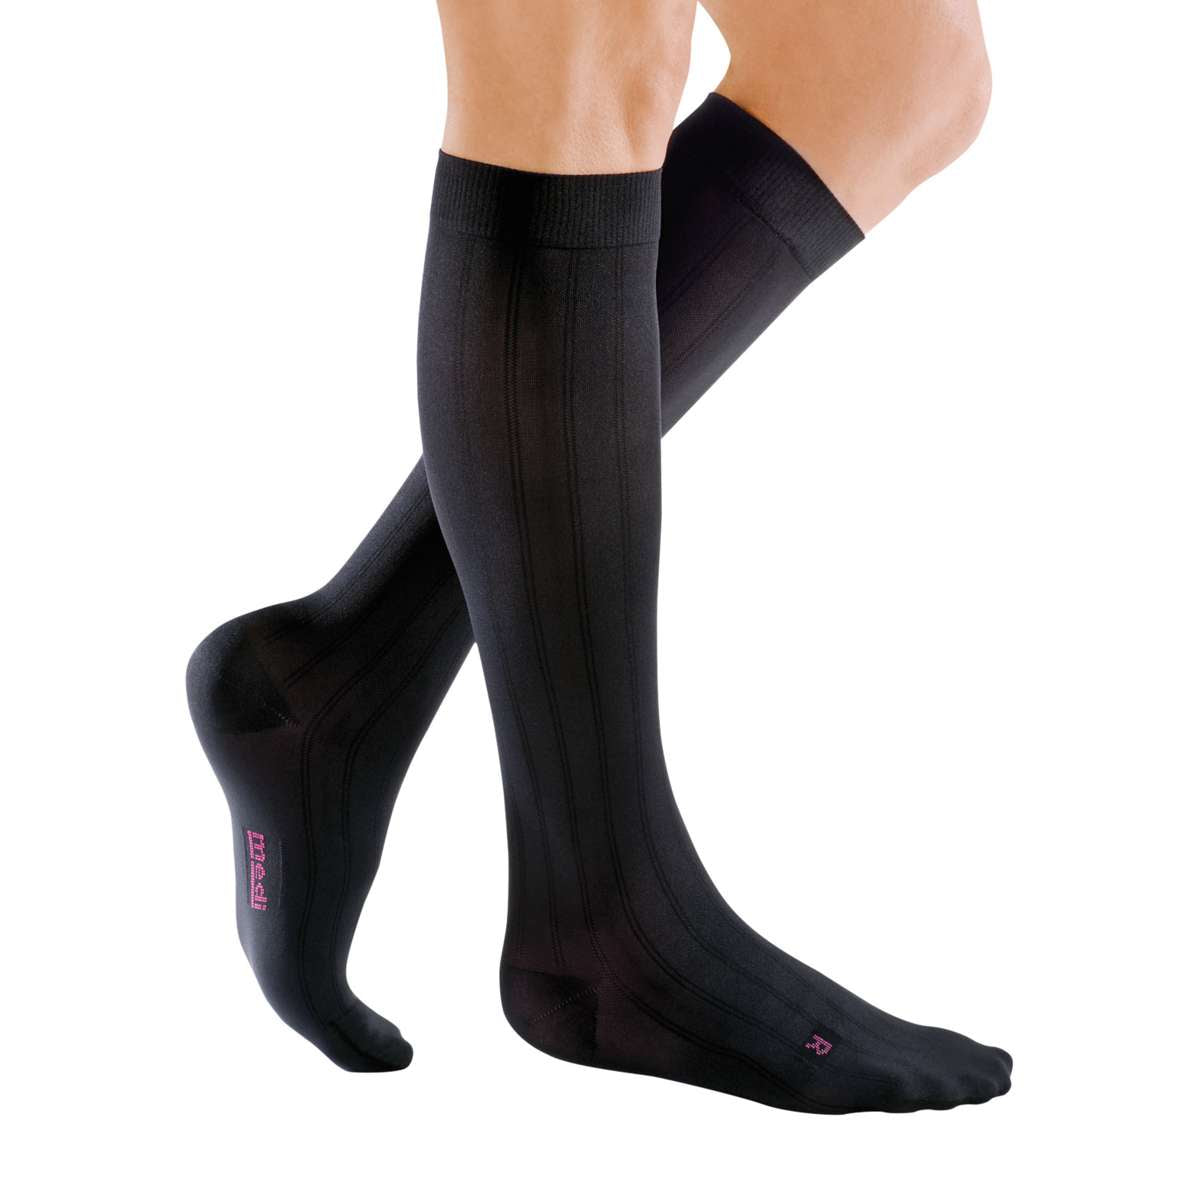 mediven for men classic 15-20 mmHg Calf High Closed Toe Compression Stockings